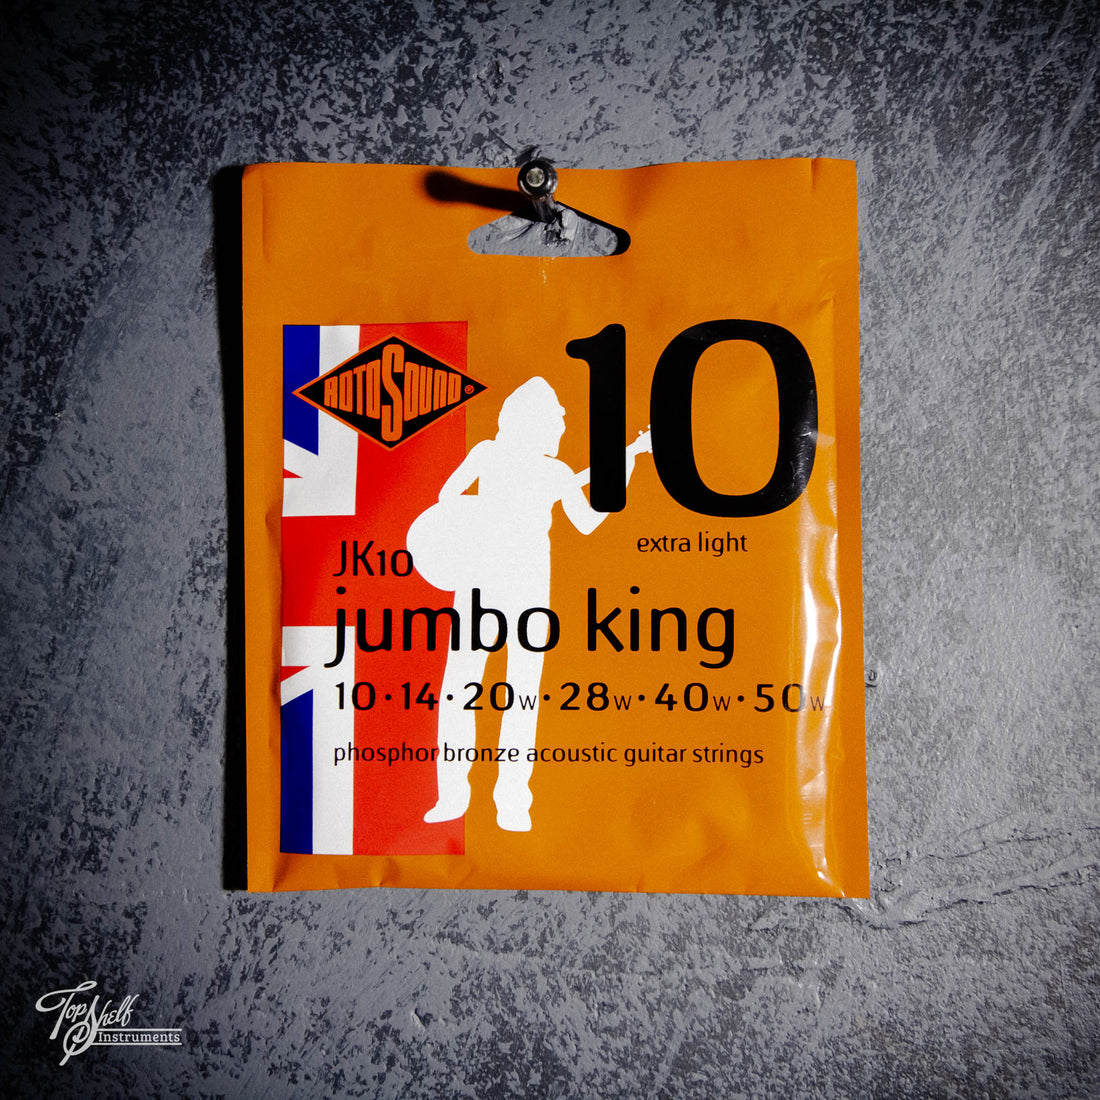 RotoSound JK10 Jumbo King 10-50 Extra Light Phosphor Bronze Acoustic Guitar Strings